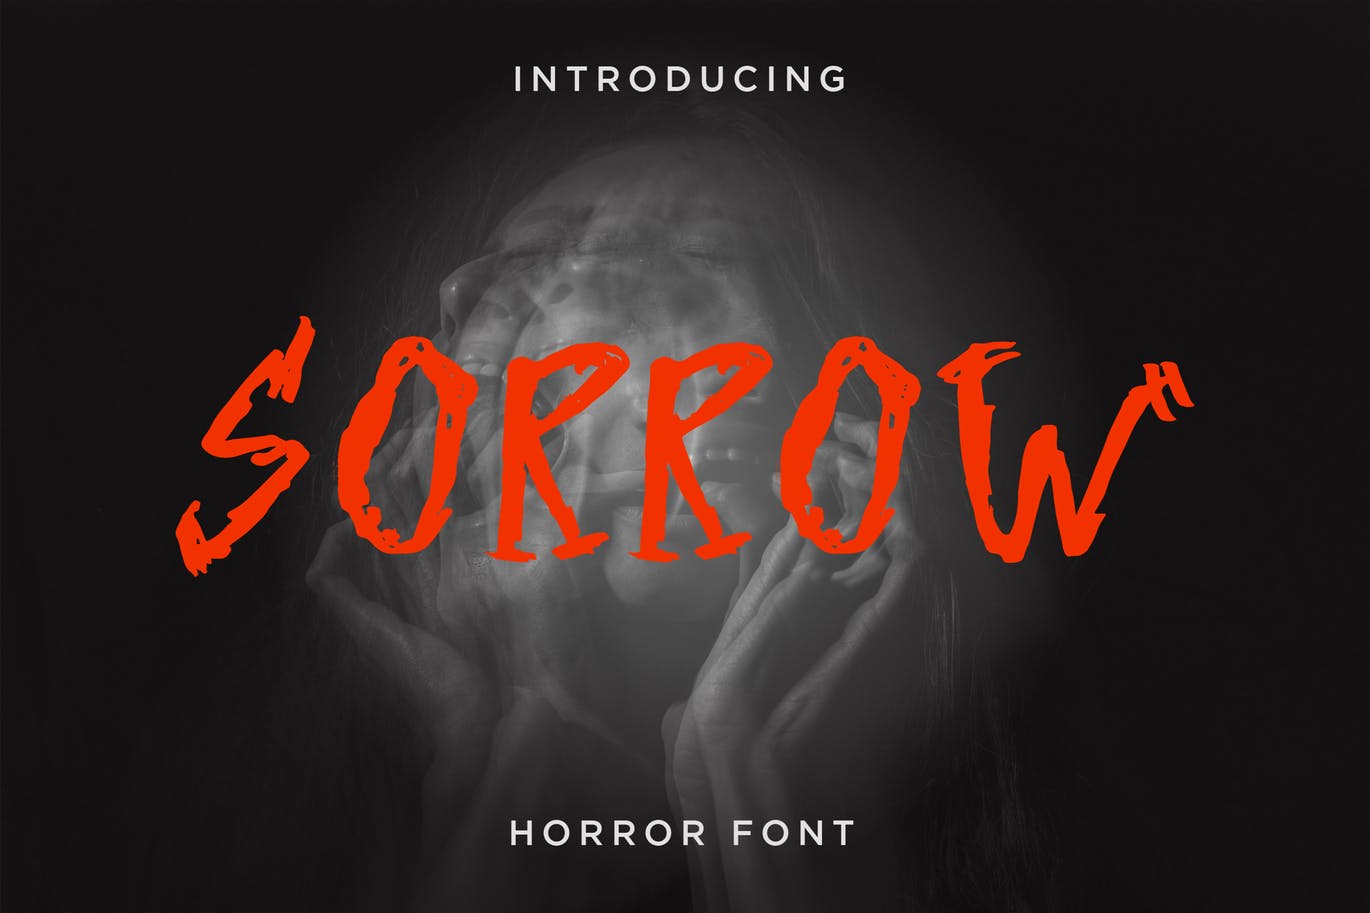 Sorrow horrow font for spooky halloween